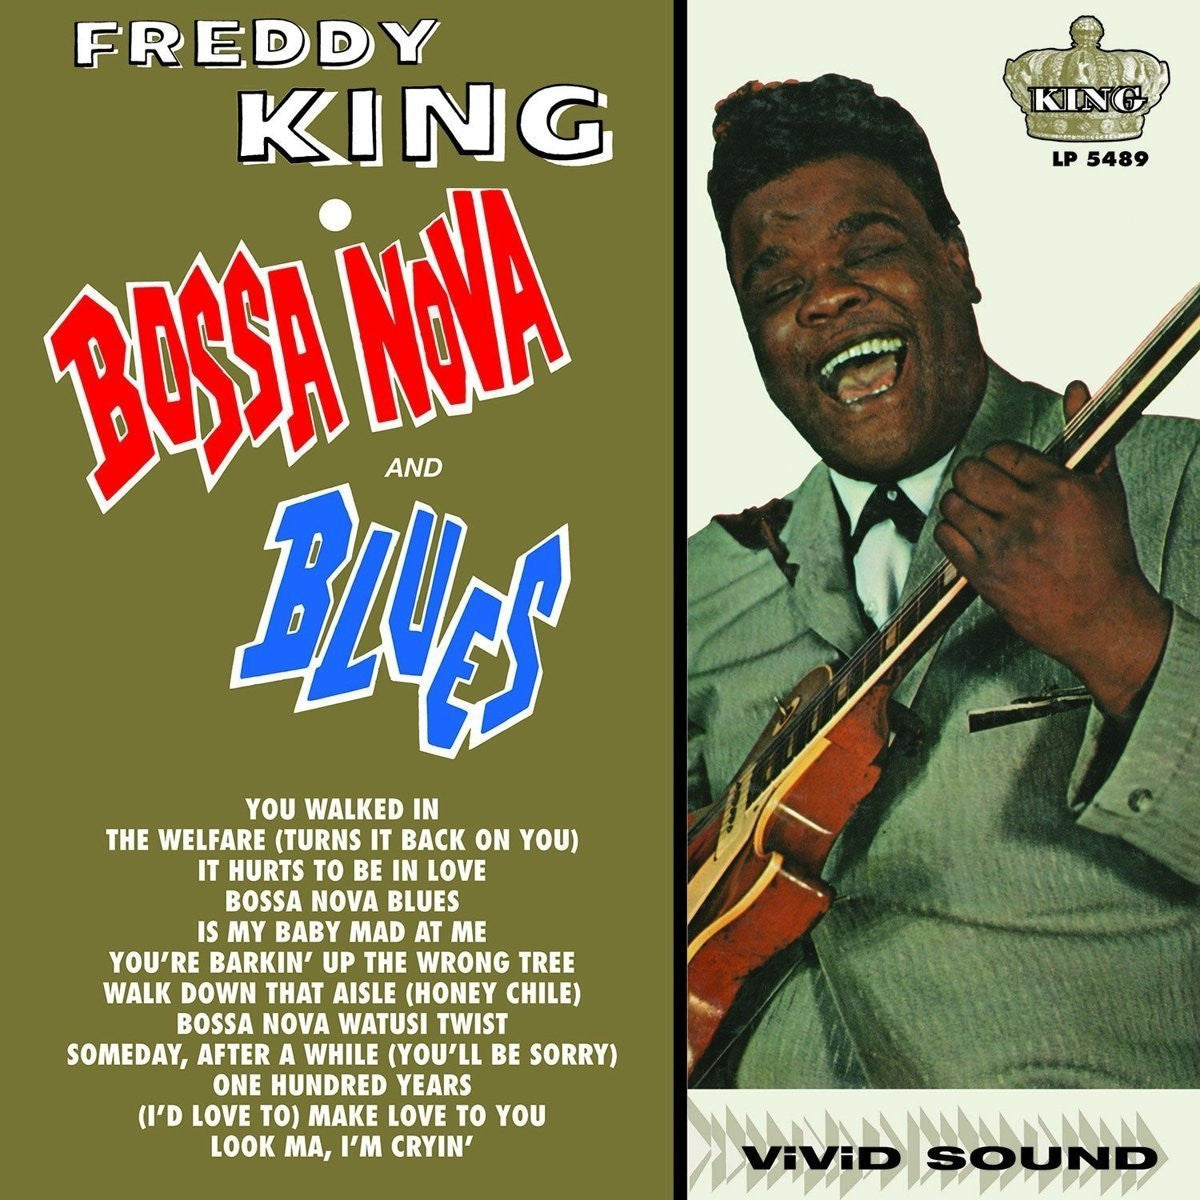 Freddy King - Bossa Nova and Blues - LP